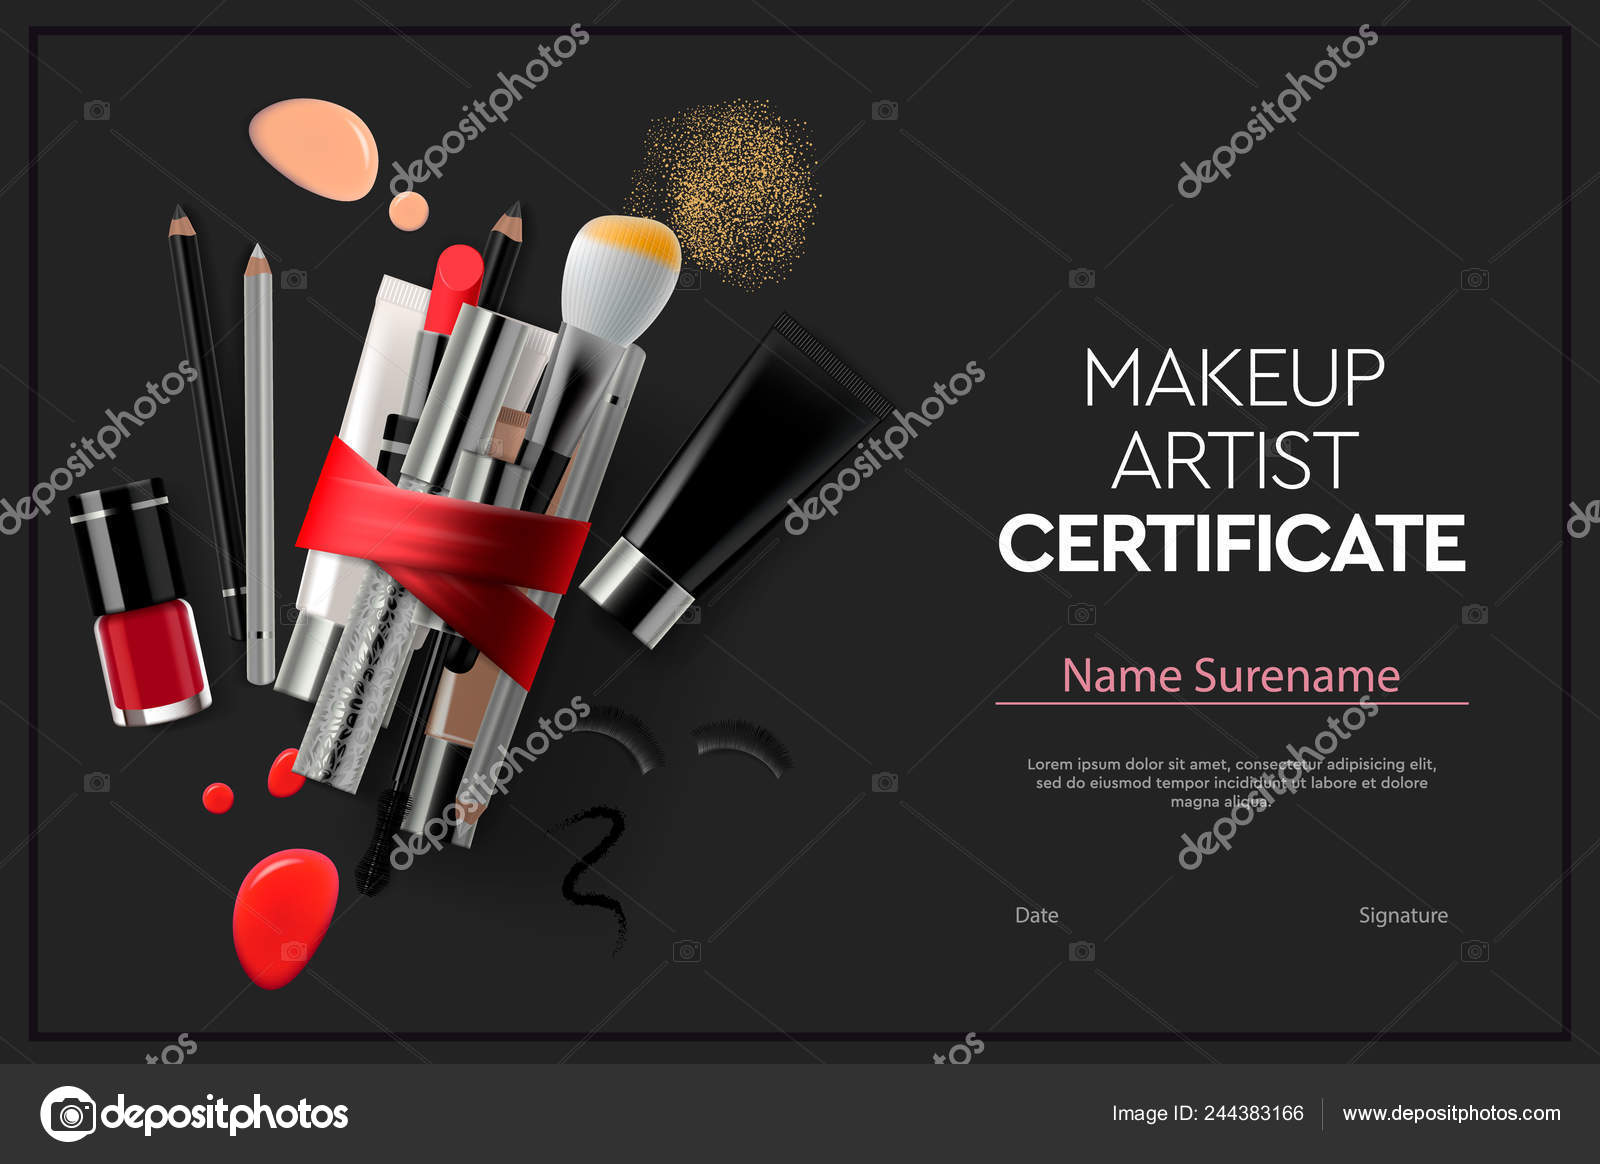 Certificate Makeup Artist Education